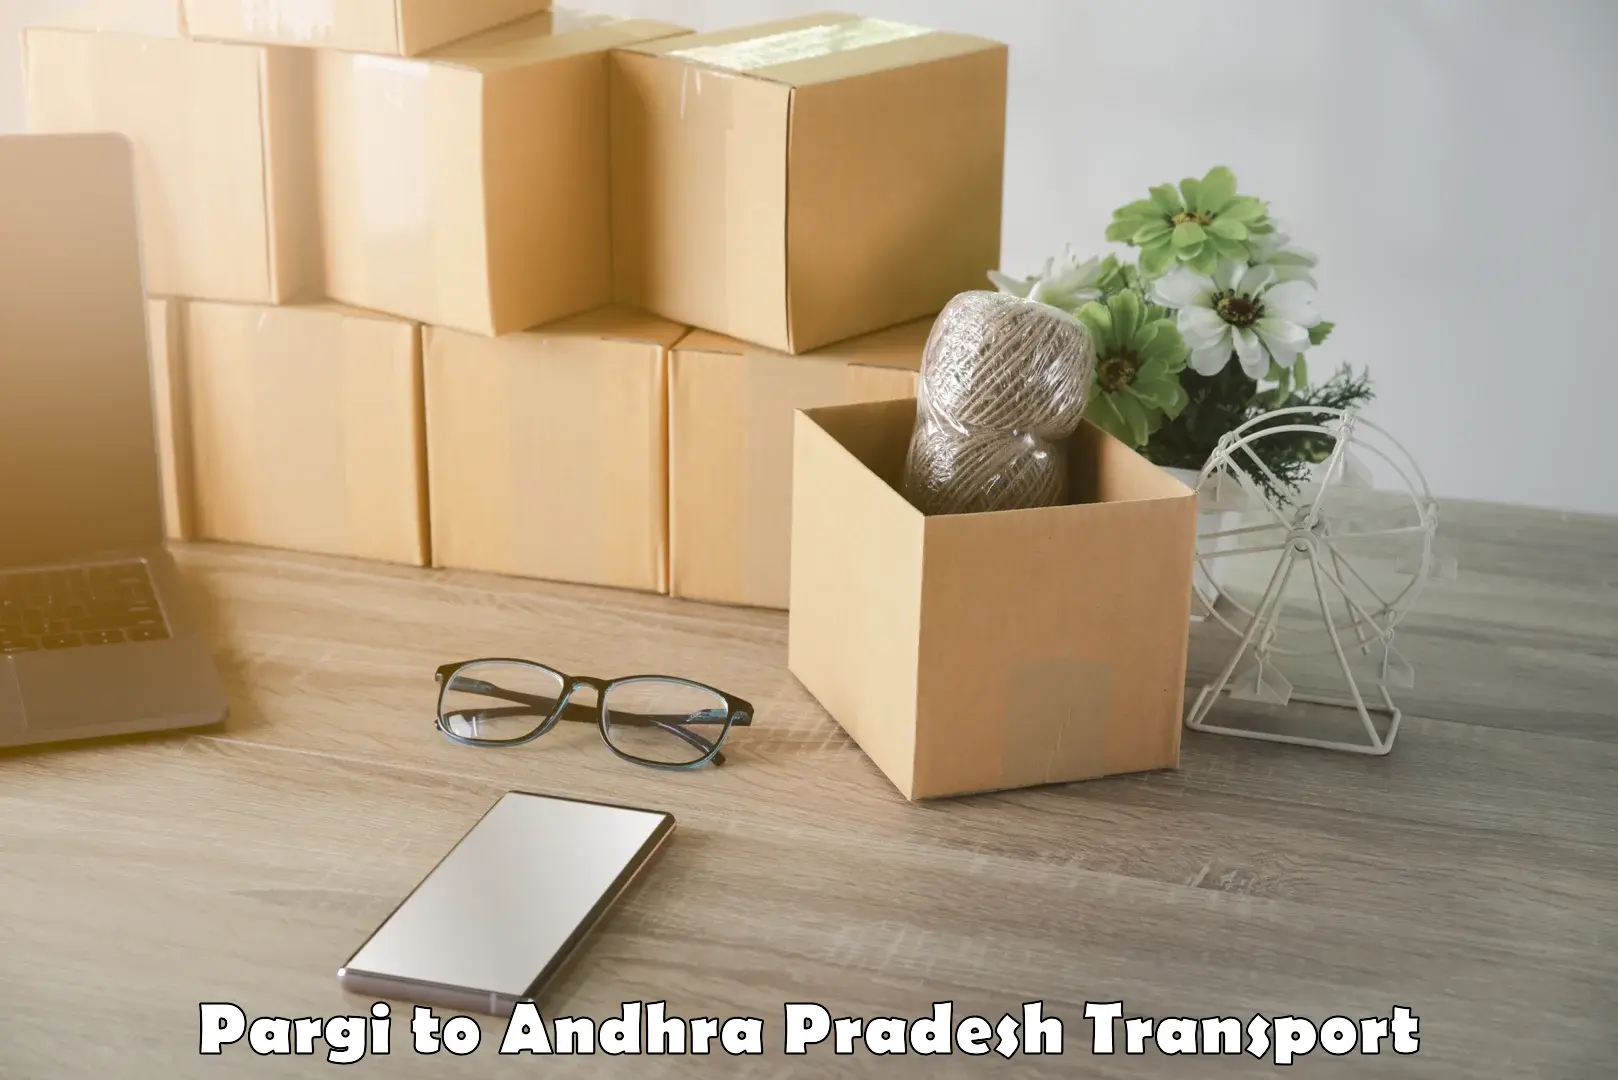 Vehicle transport services Pargi to Andhra Pradesh